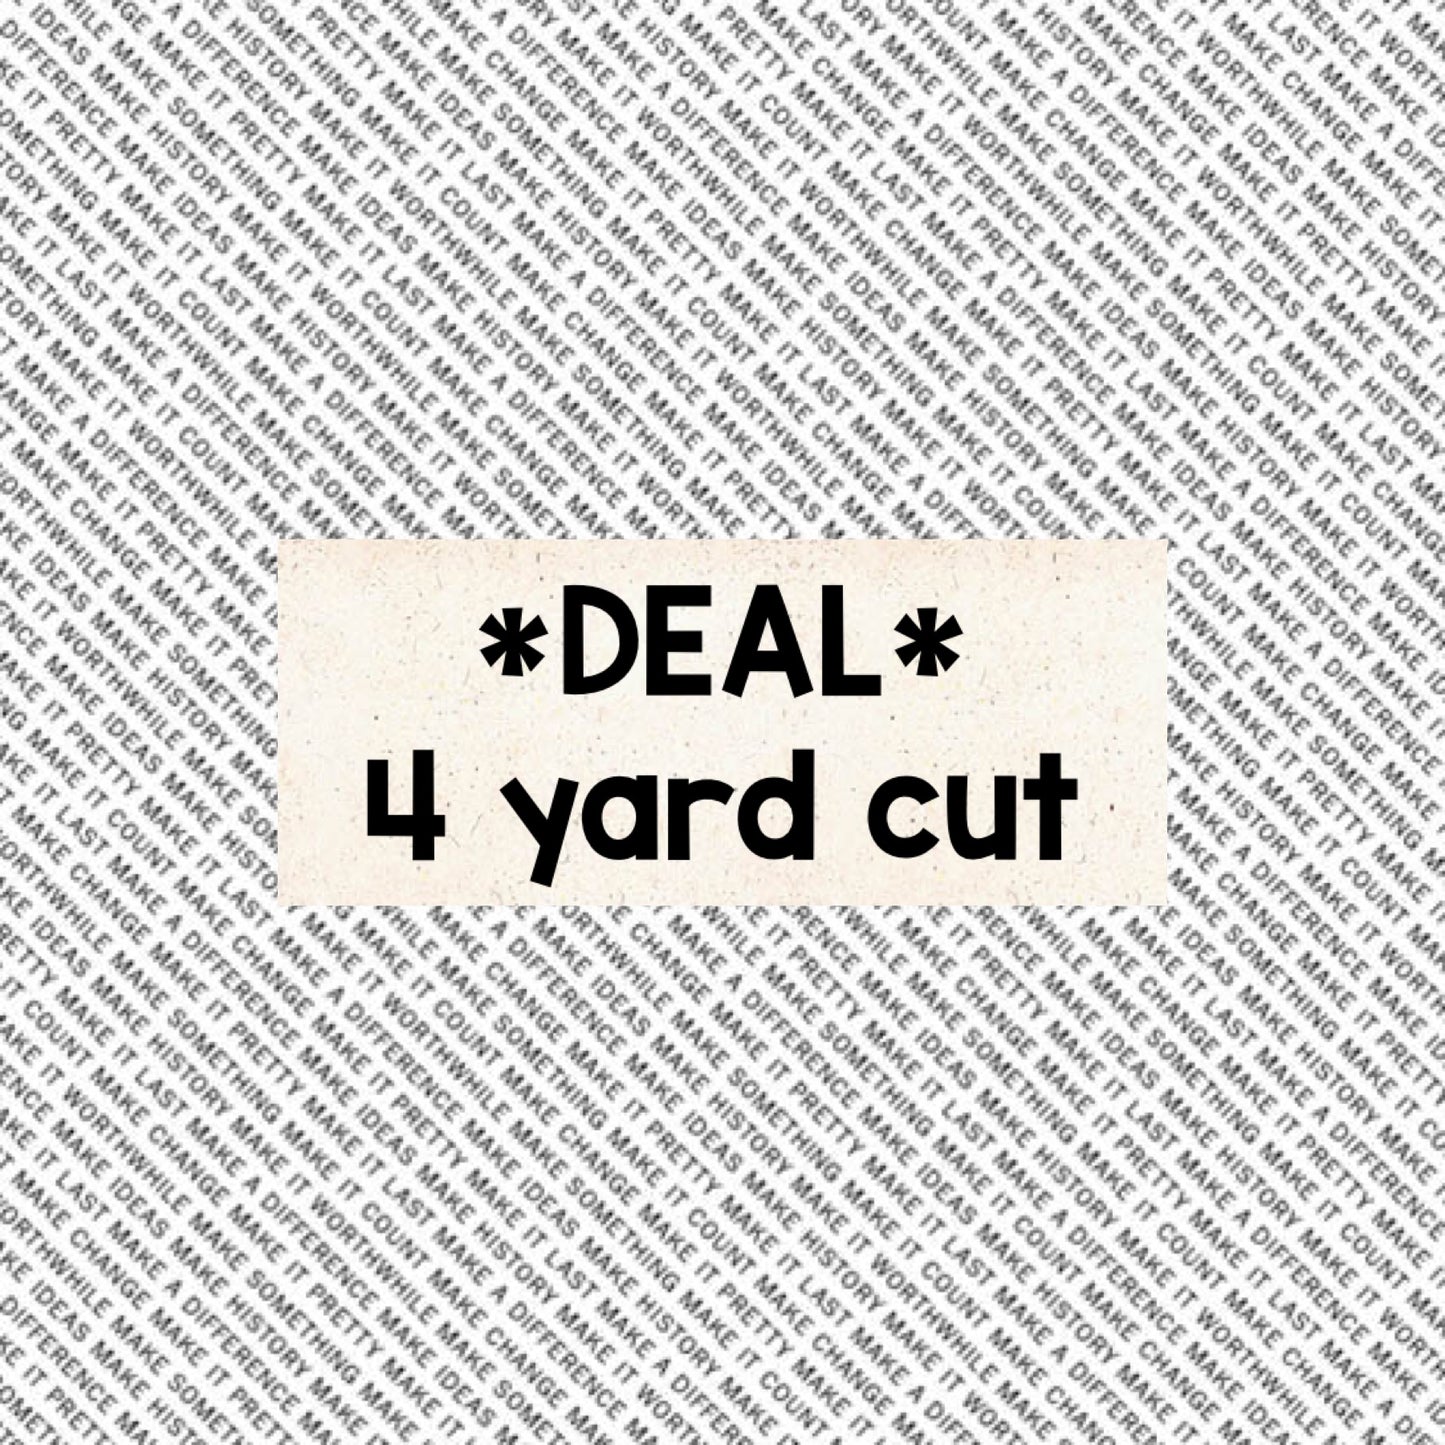 Breaking News White 4 Yard Cut Deal